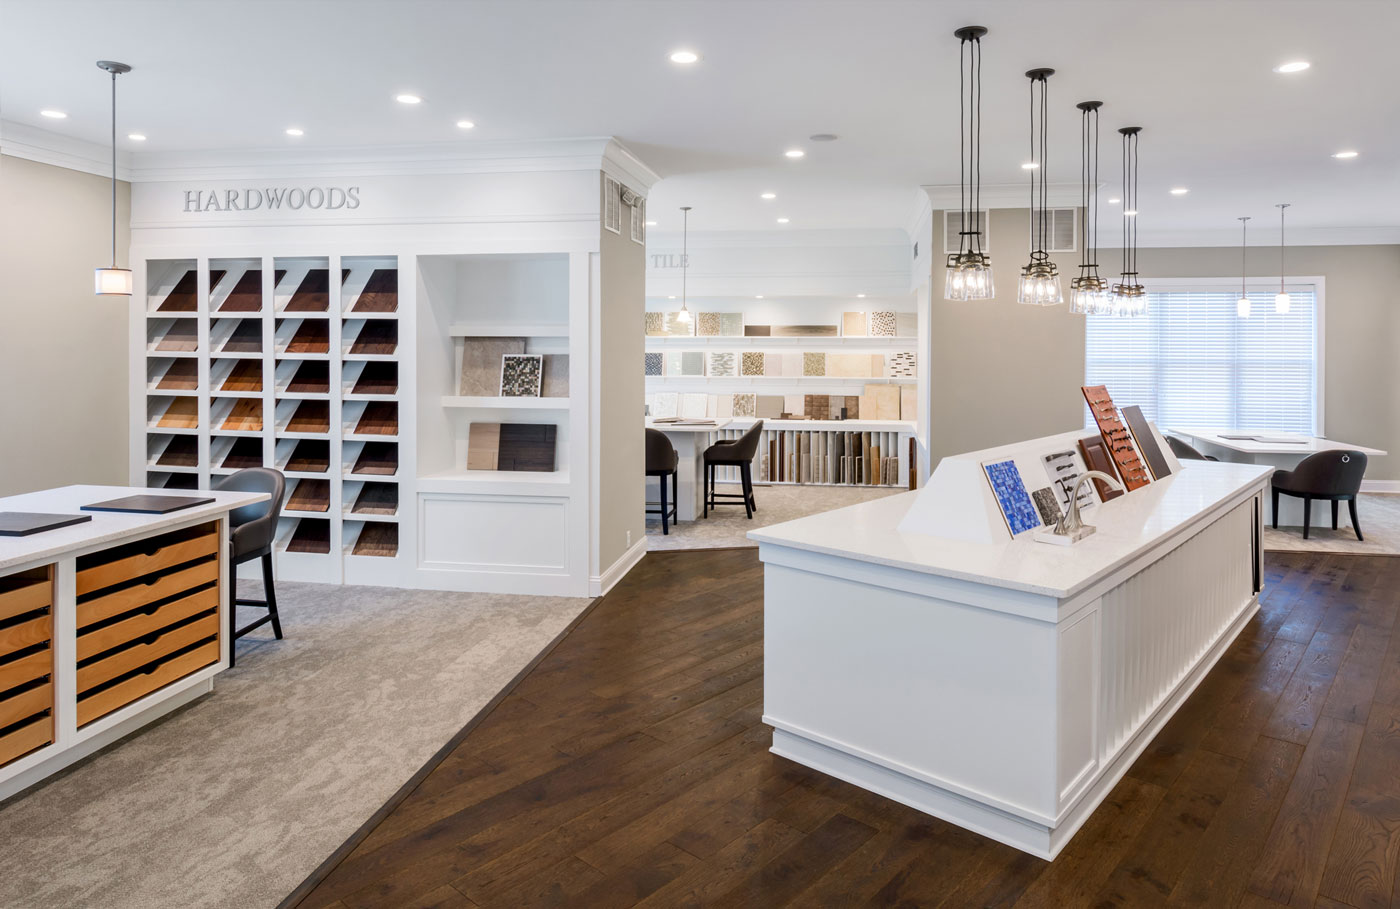 Design center showcasing design and merchandising options for flooring and tile in Delaware.